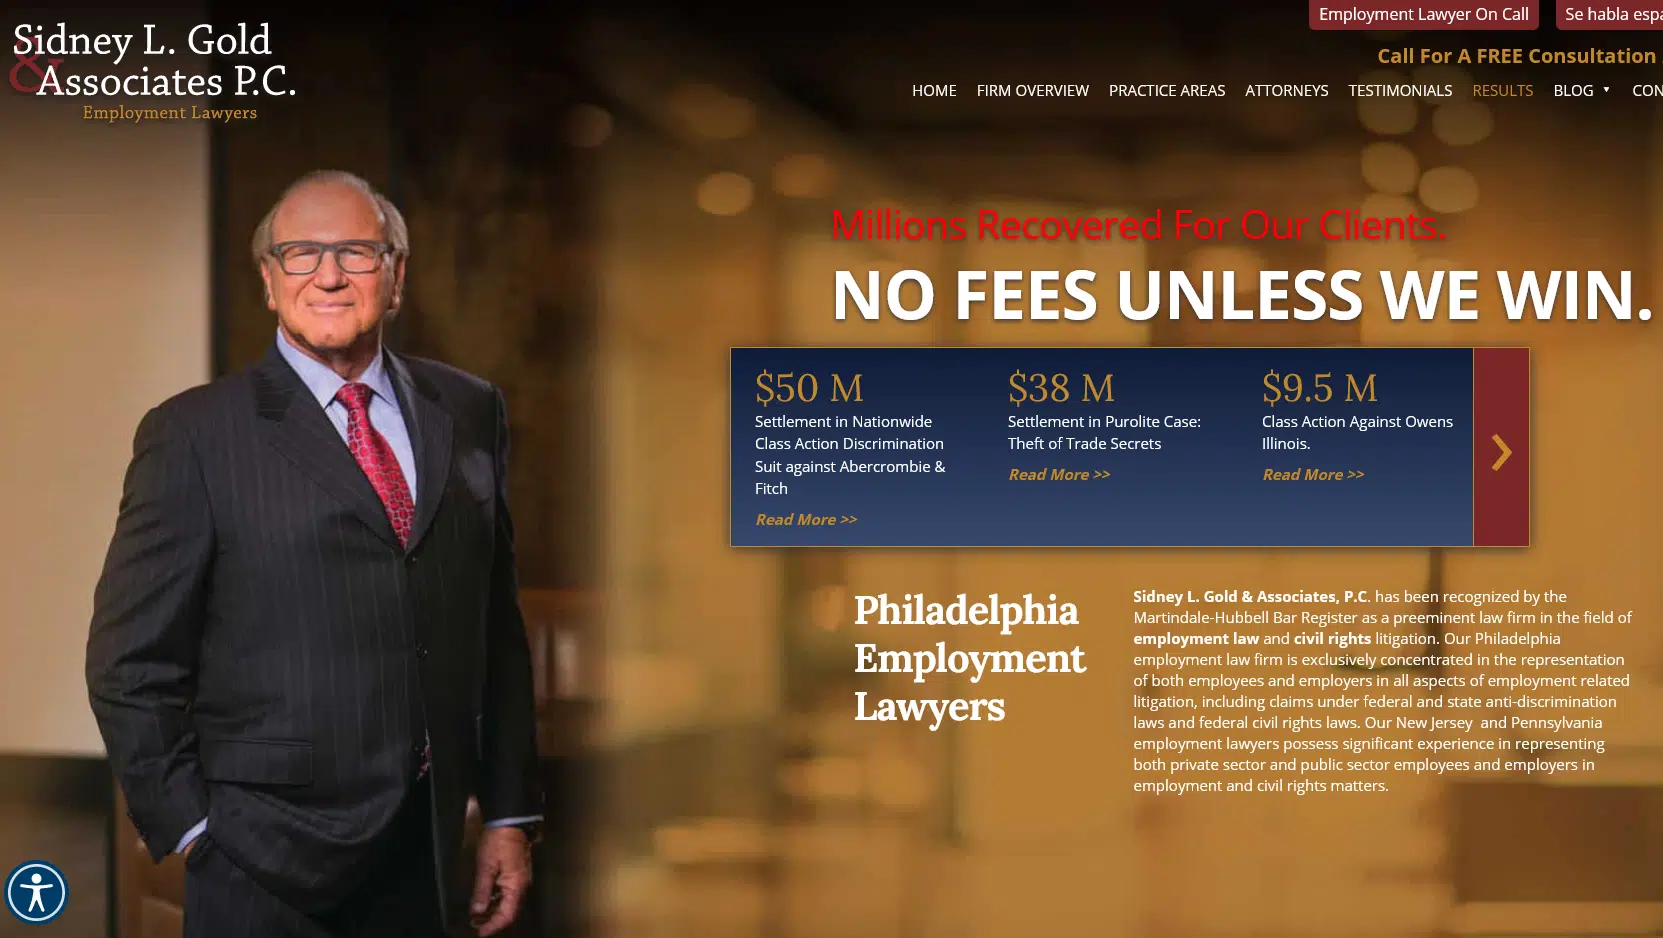 Philadelphia_Employment_Lawyers_Sidney_L_Gold_Associates_P_C_